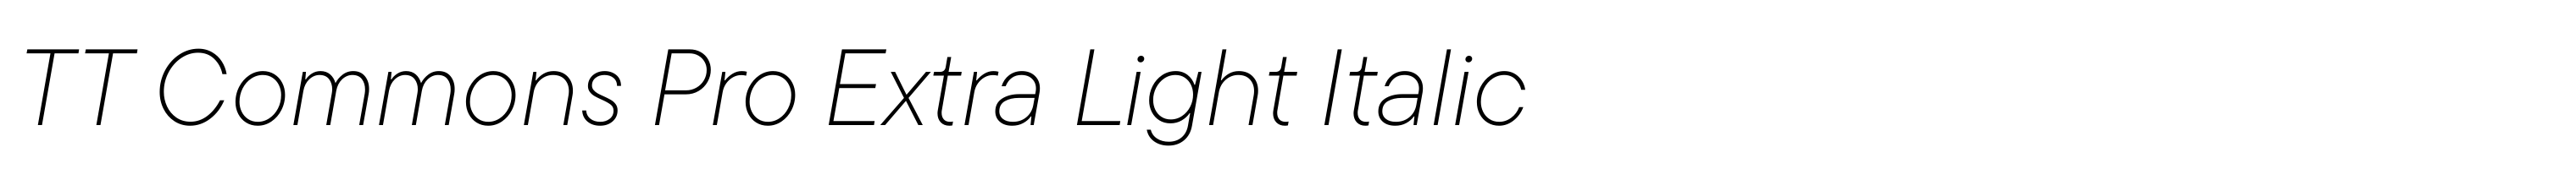 TT Commons Pro Extra Light Italic